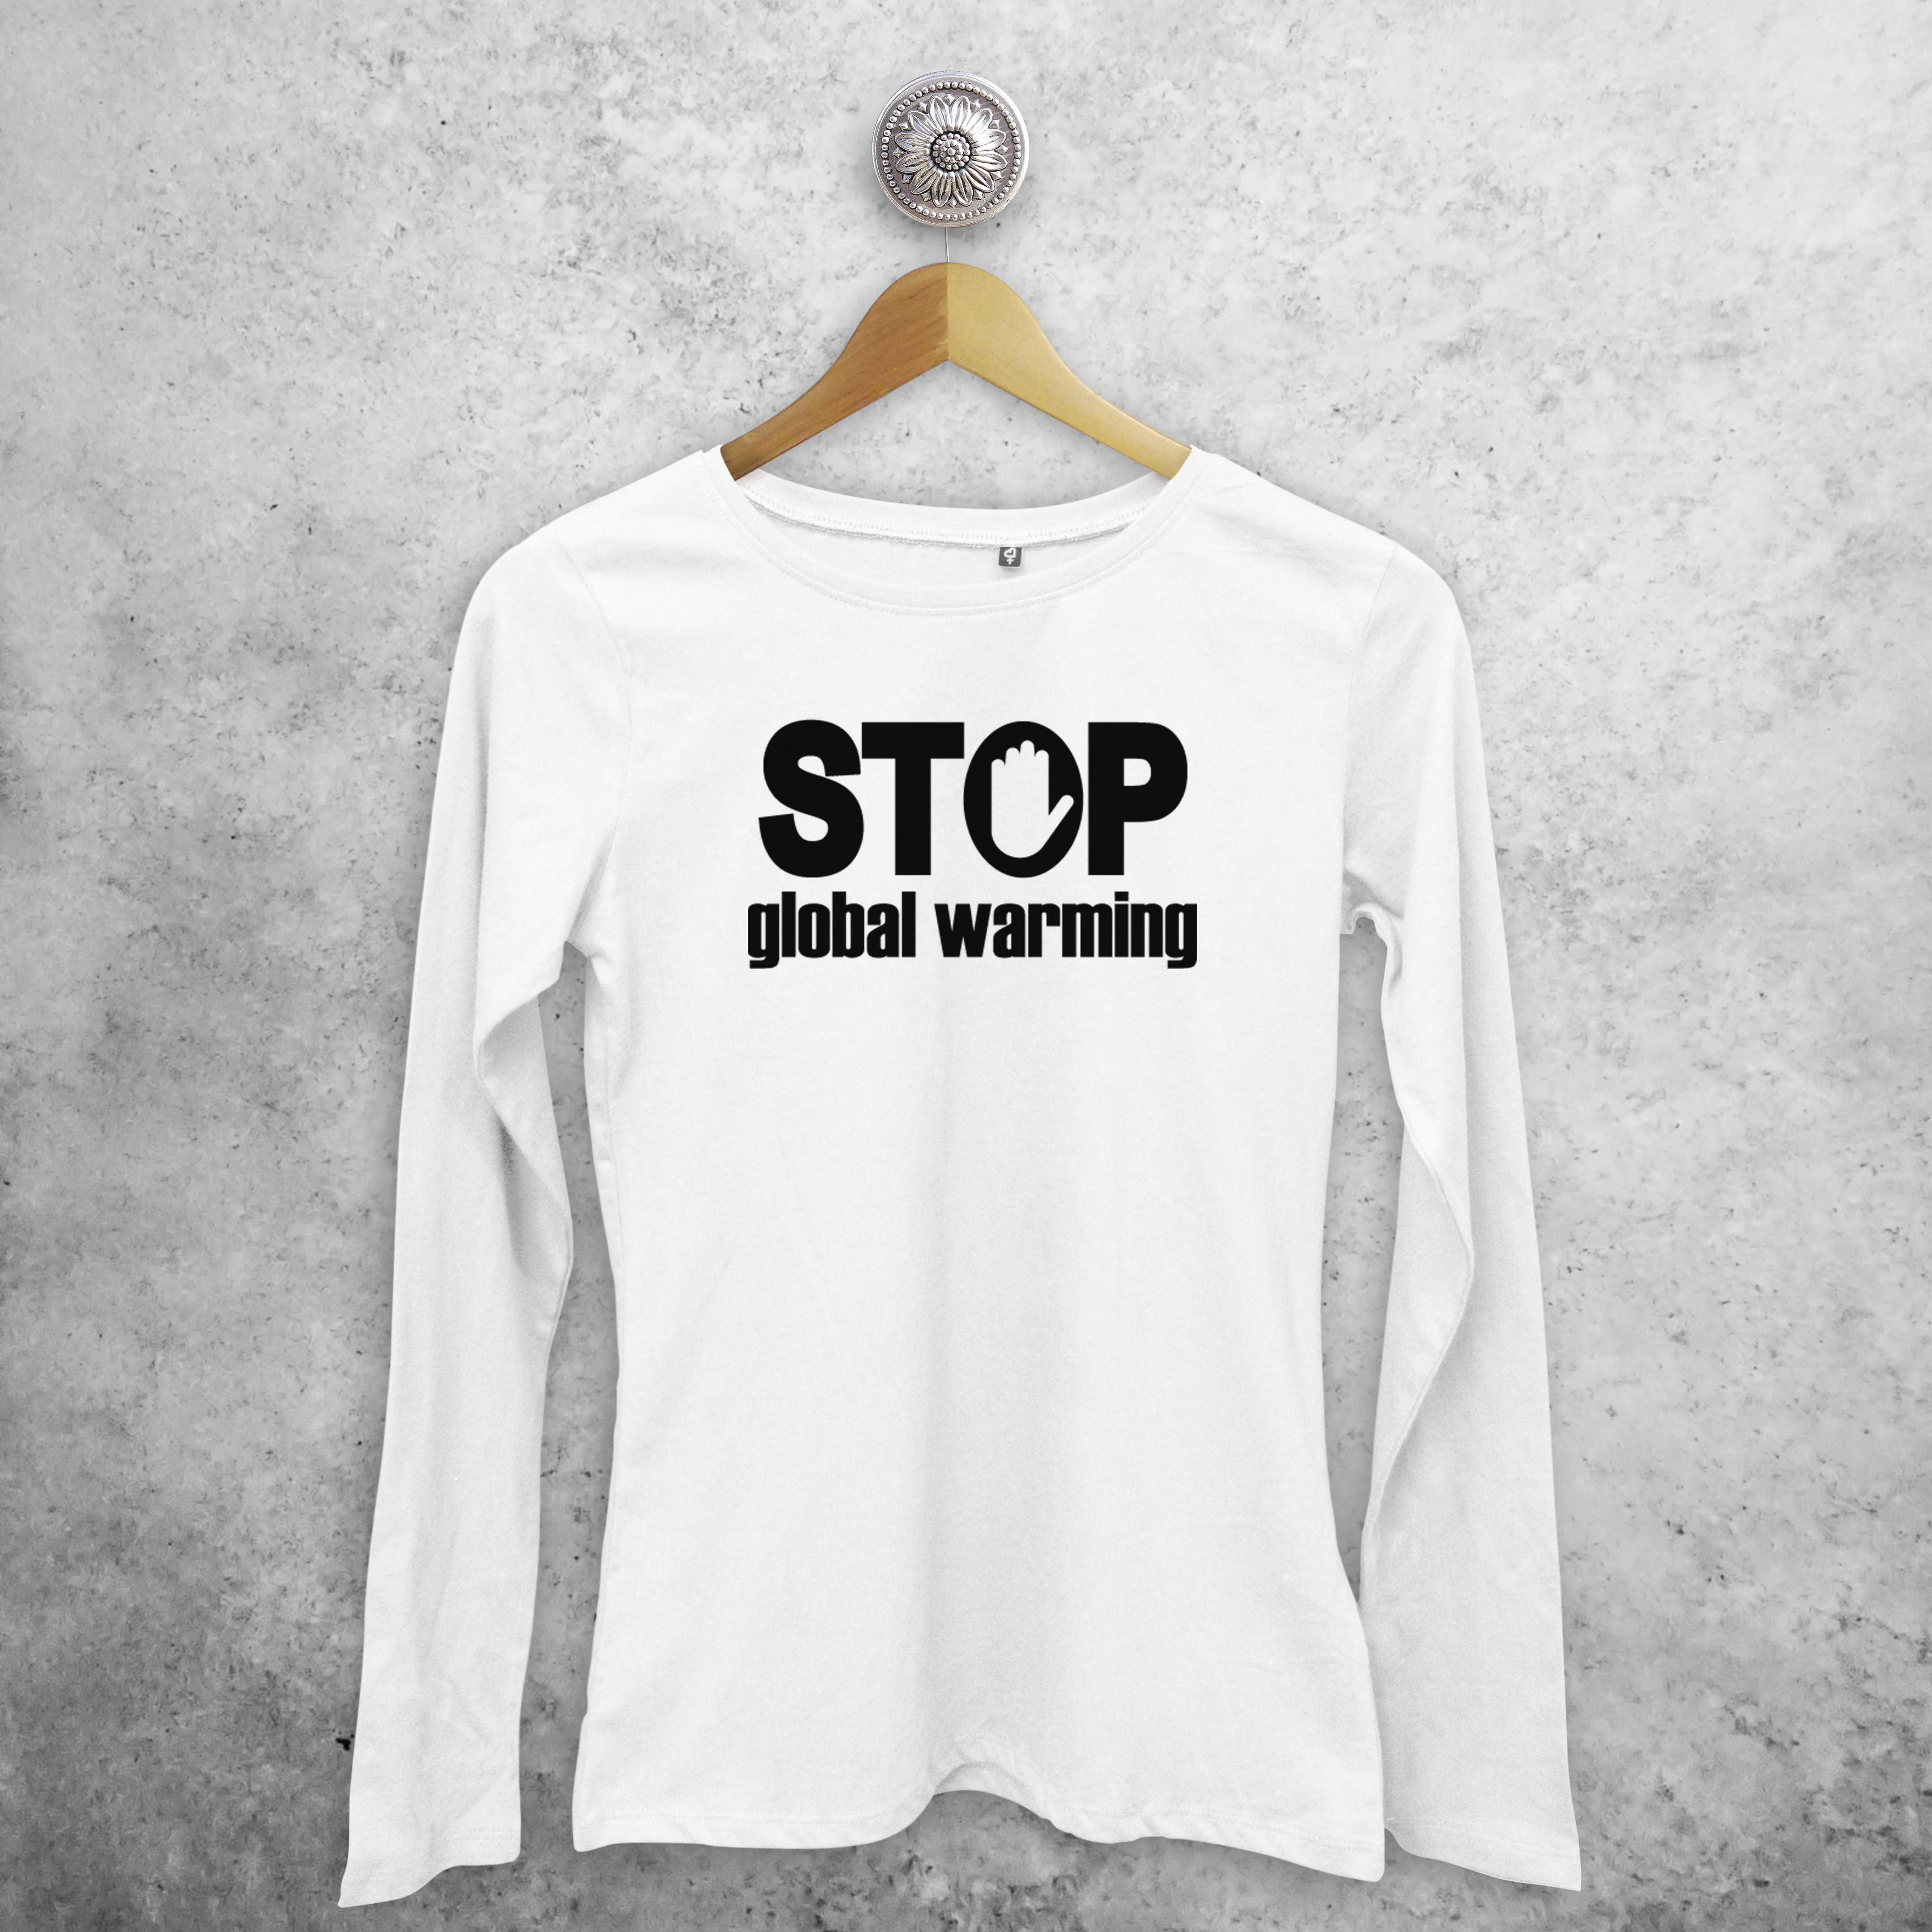 'Stop global warming' adult longsleeve shirt